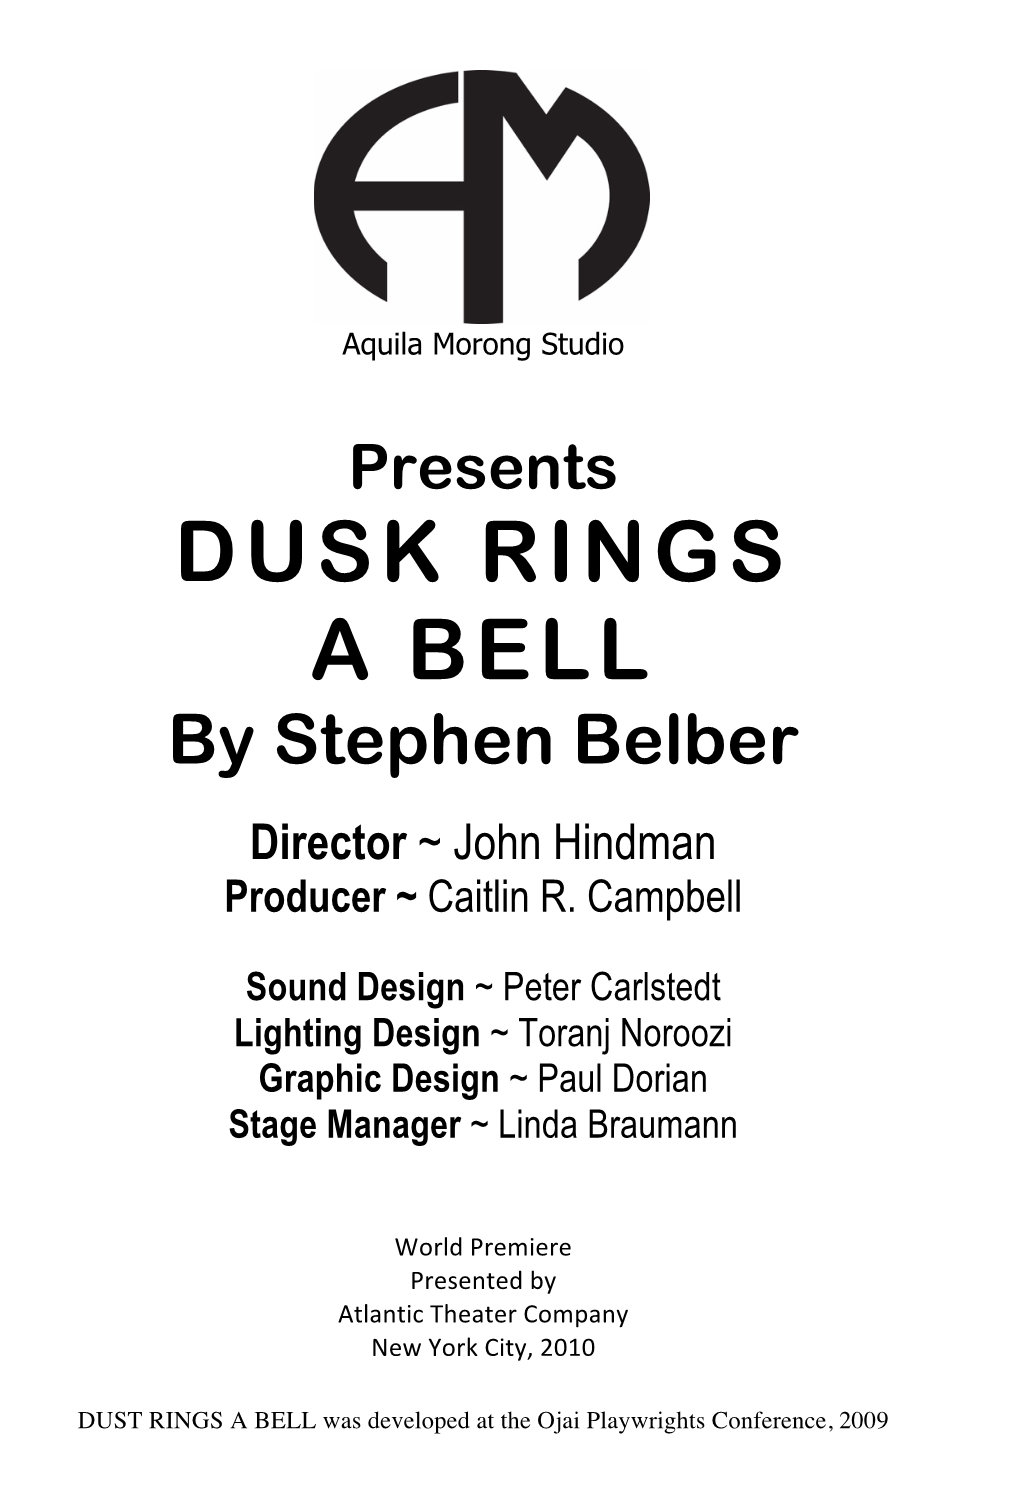 DUSK RINGS a BELL by Stephen Belber Director ~ John Hindman Producer ~ Caitlin R